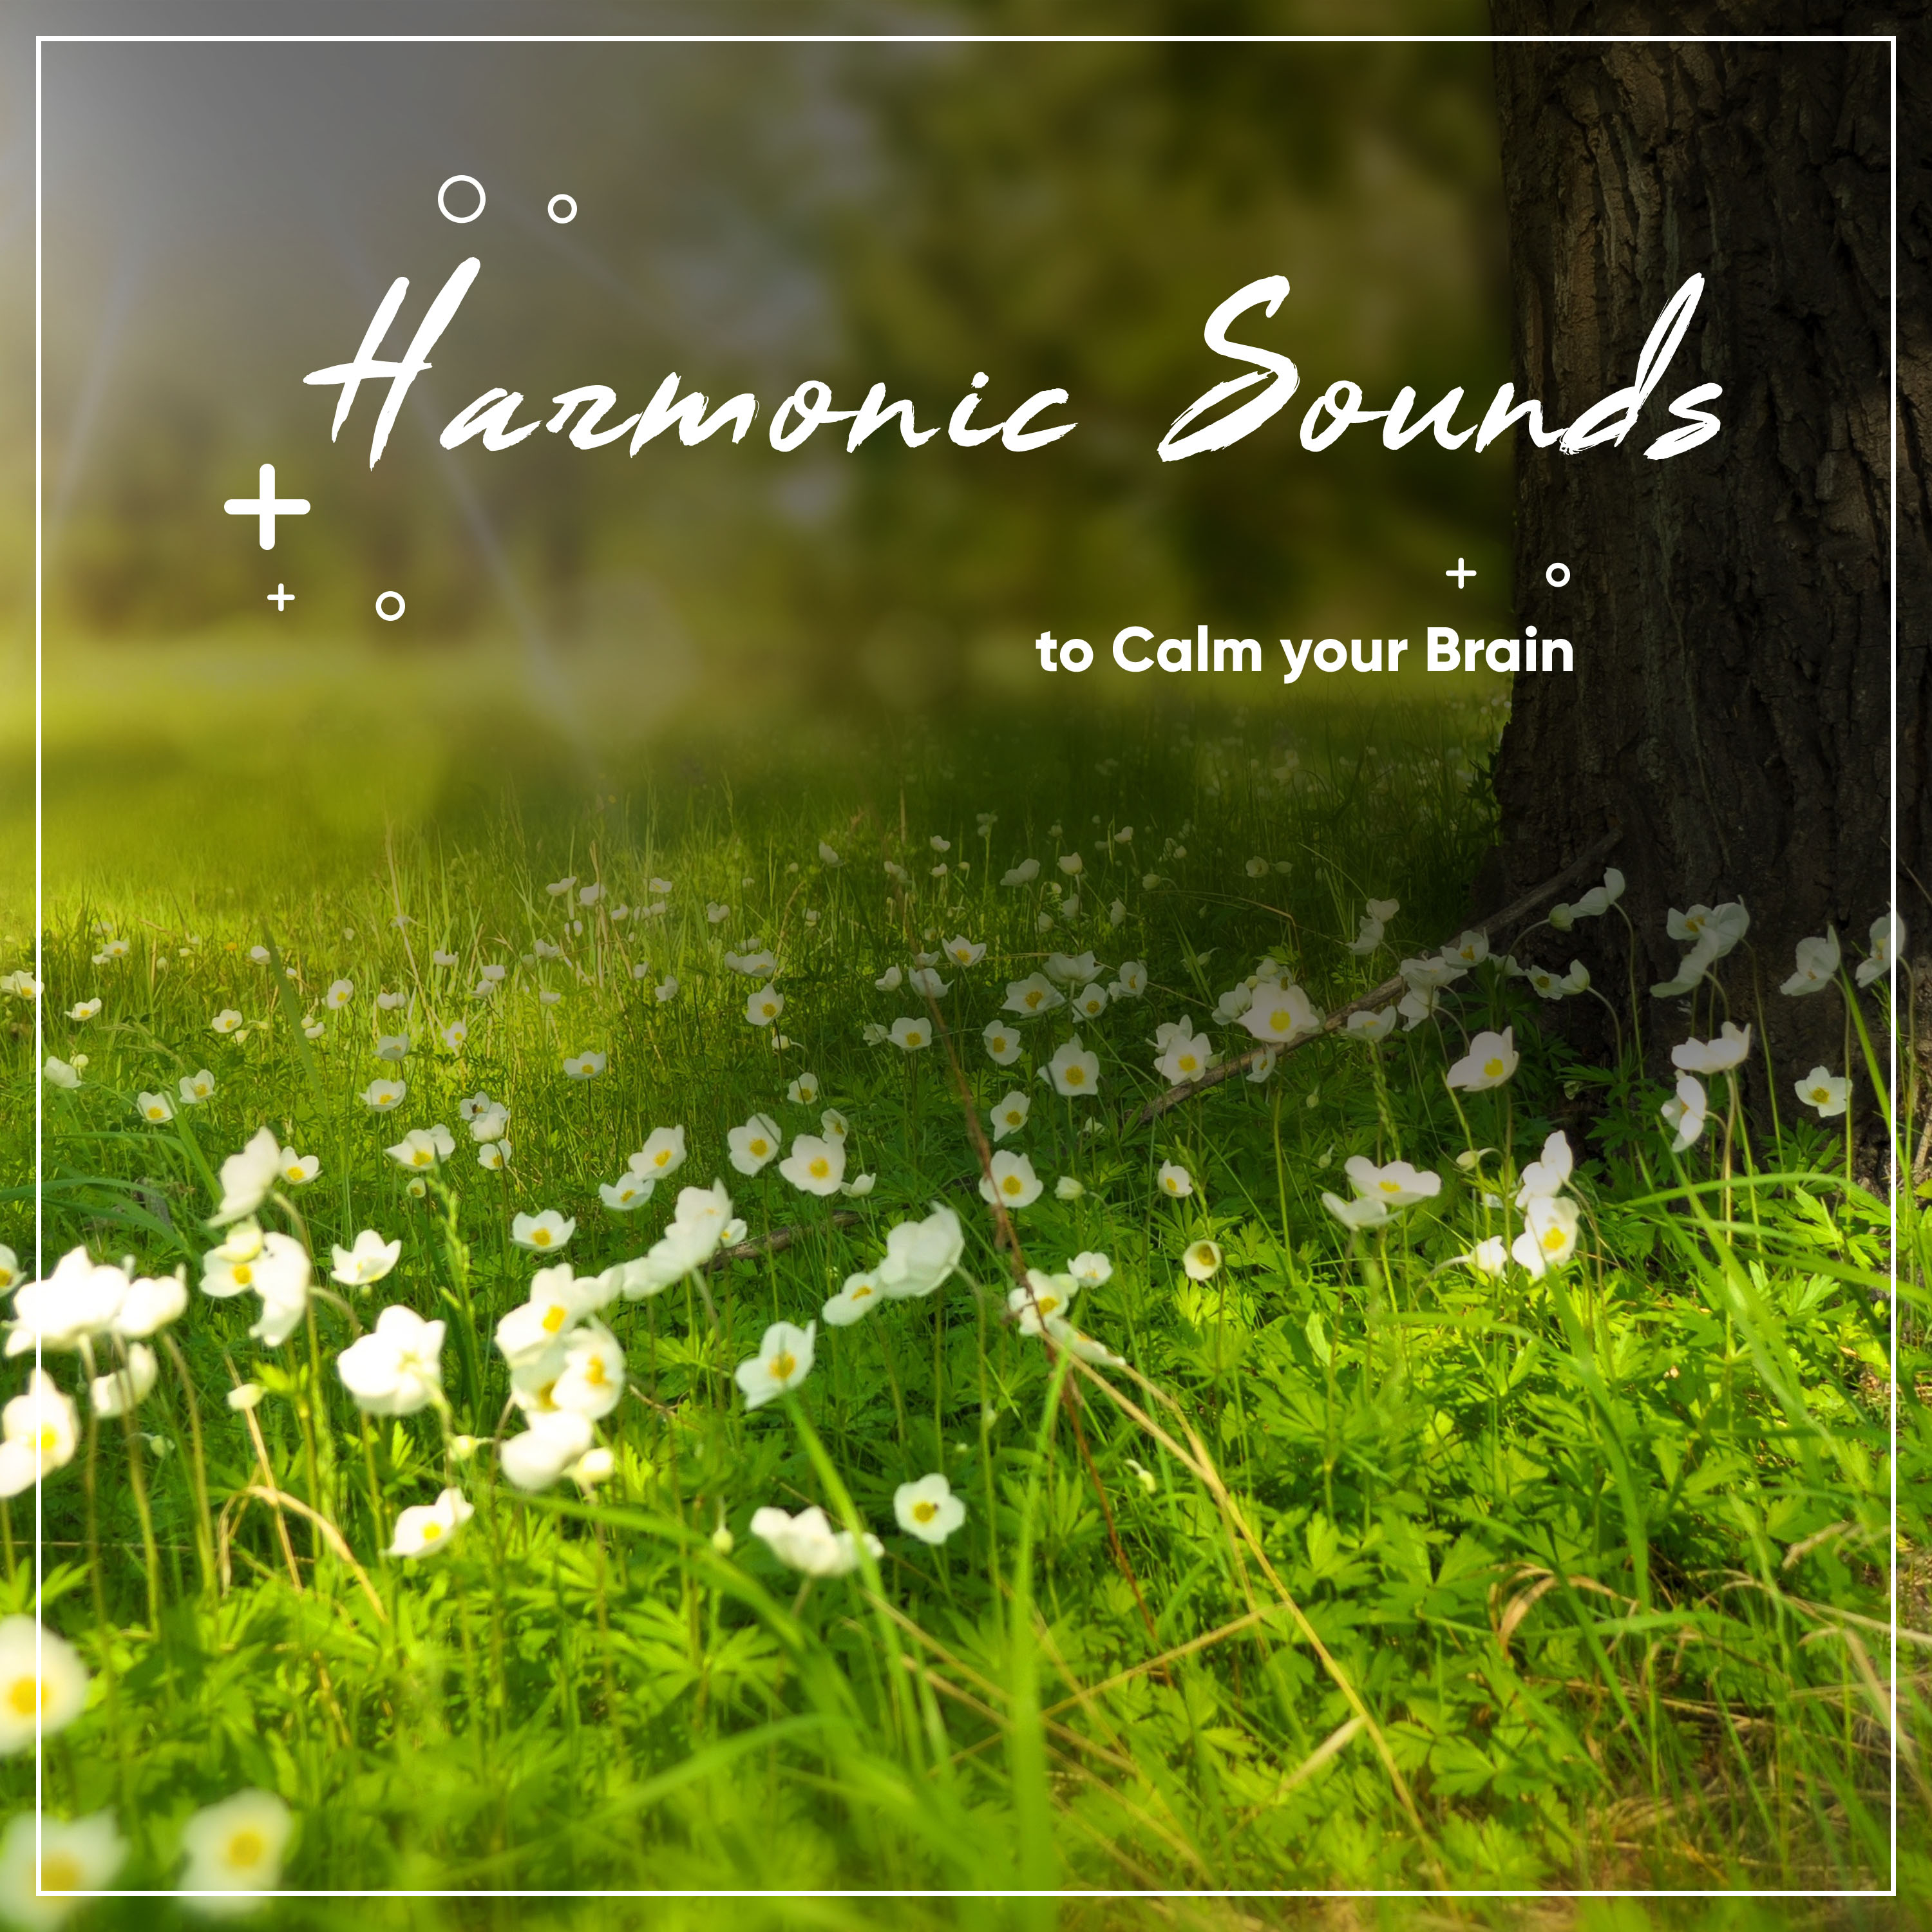 #12 Harmonic Sounds to Calm your Brain